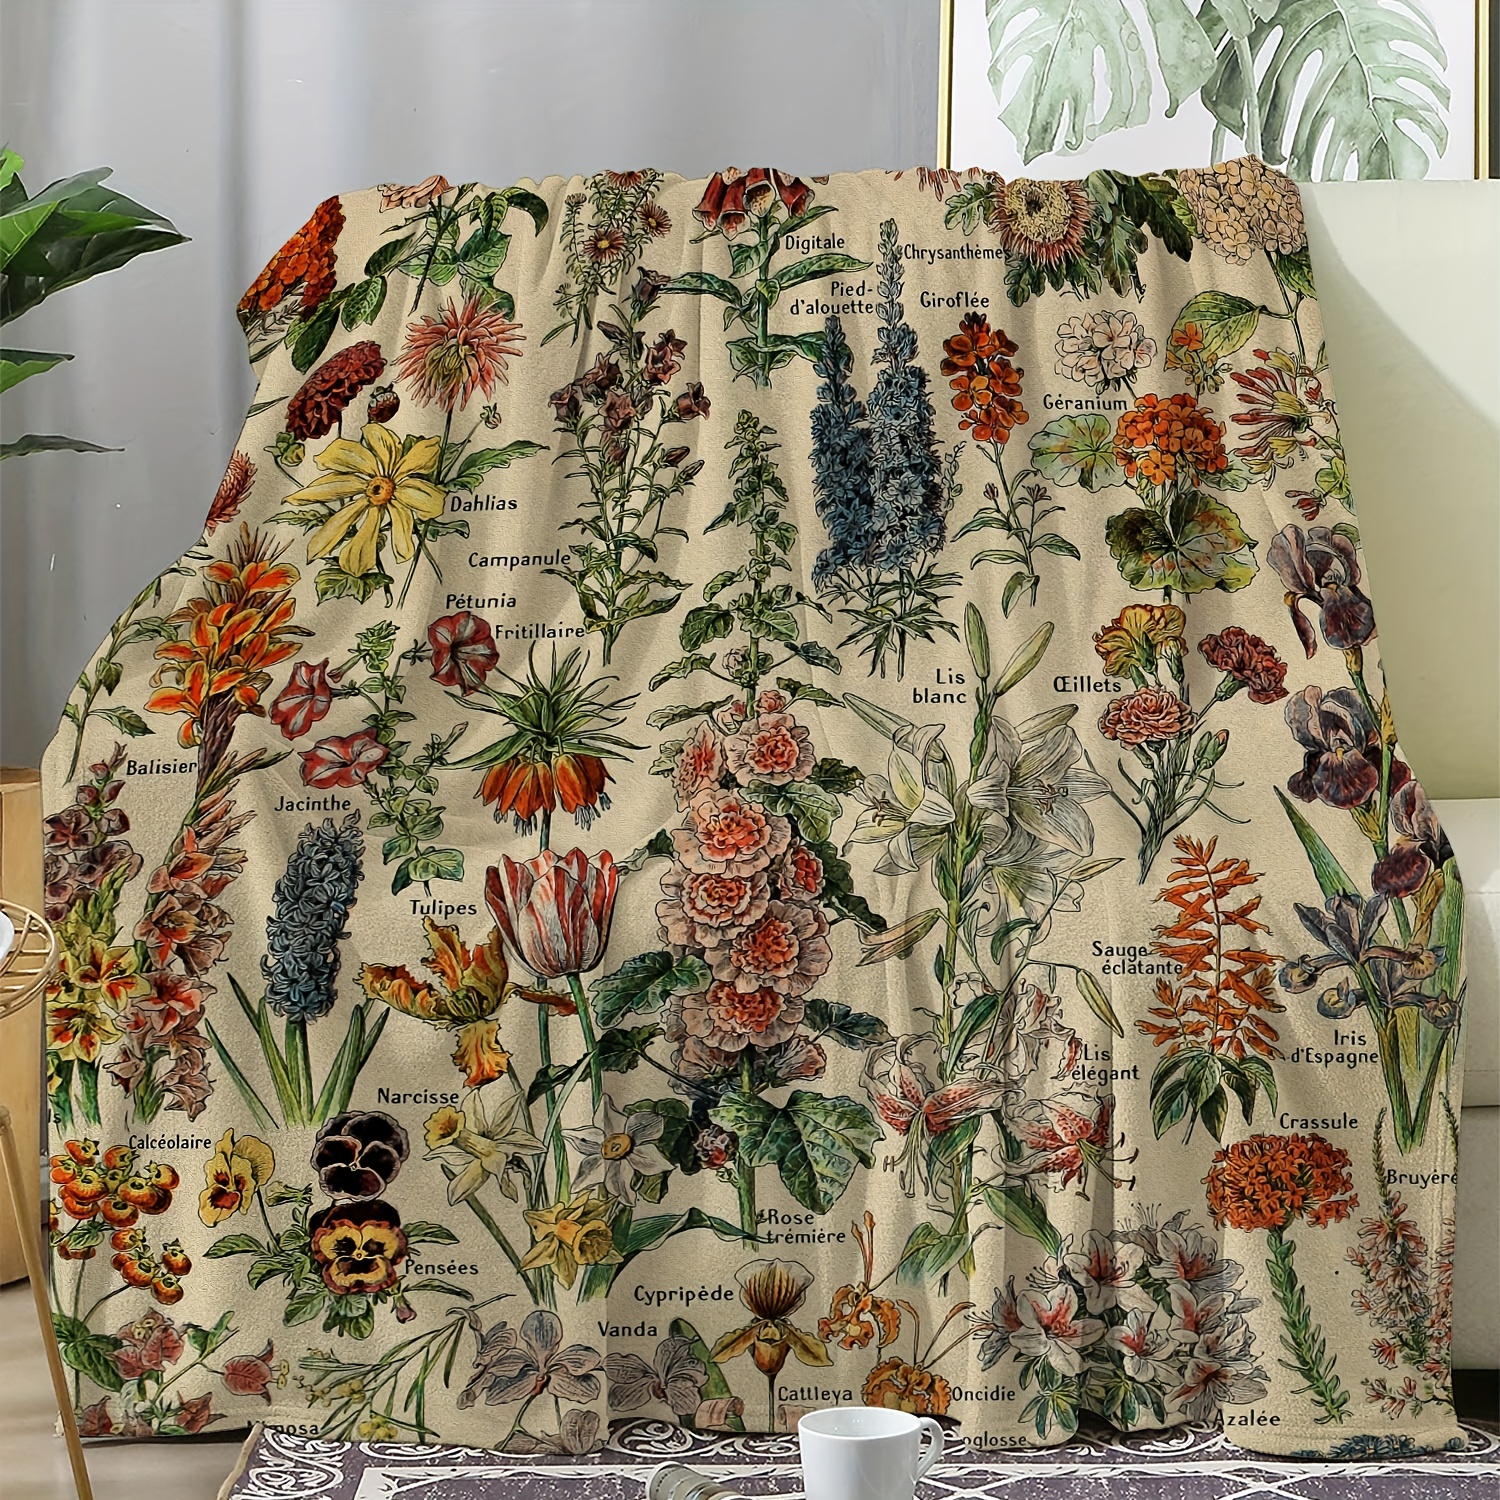 Flora Printed Throws | Floral Blanket Patterns